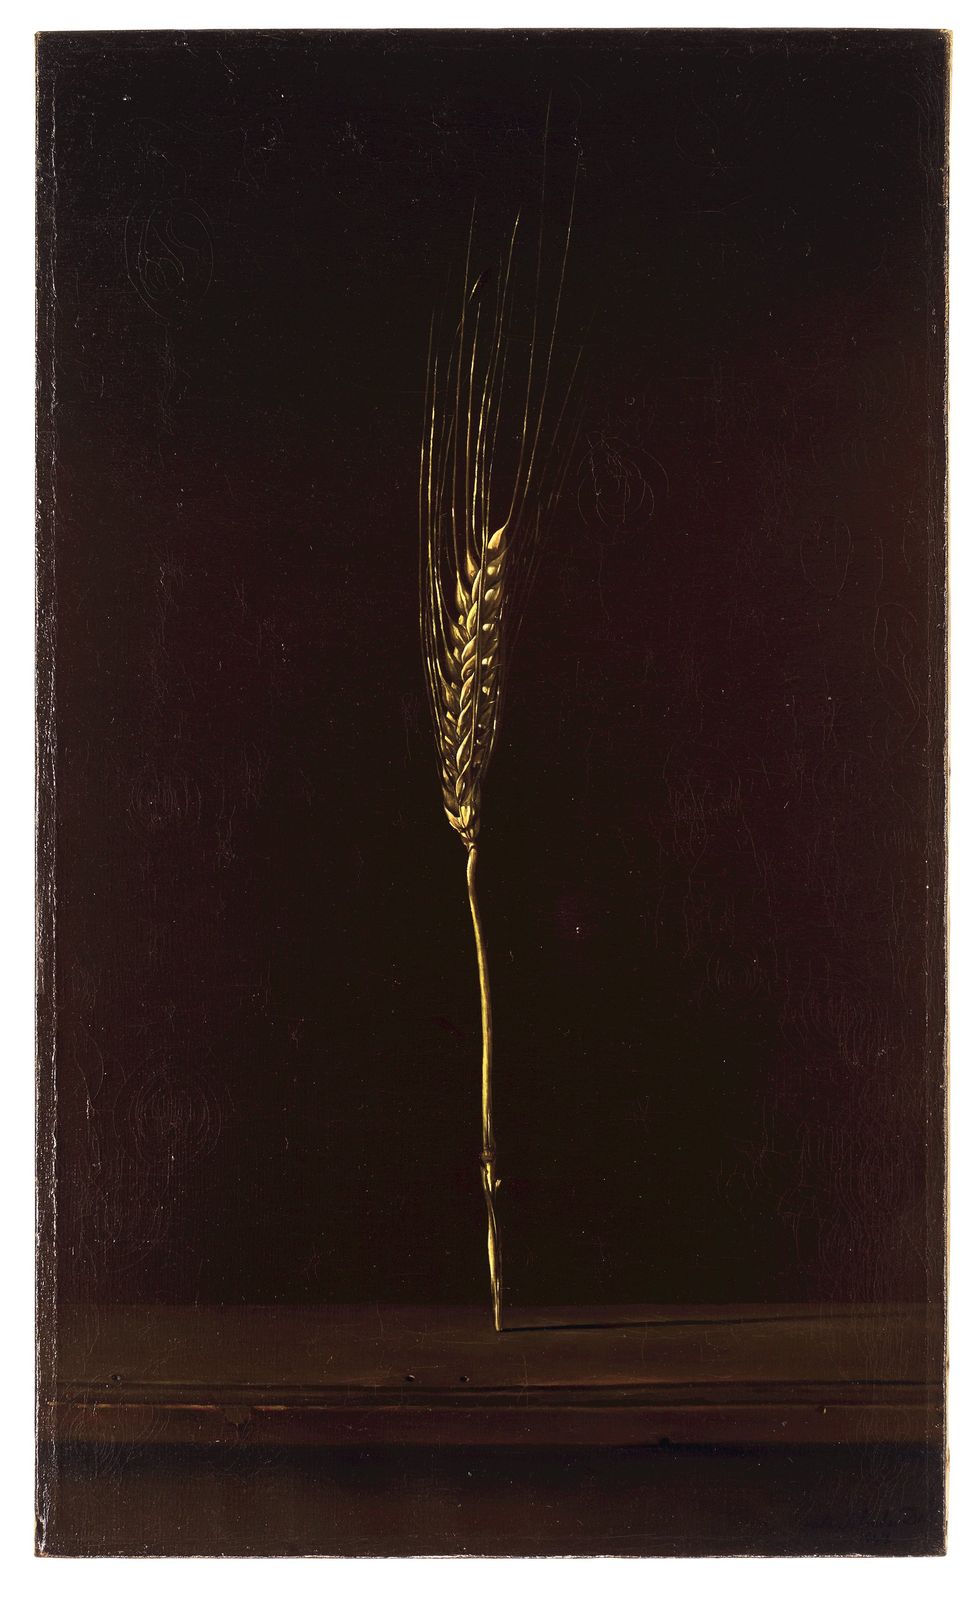 Photograph, Twig, Grass family, Snapshot, Rectangle, Still life photography, Plant stem, Wheat, Stock photography, Still life, 